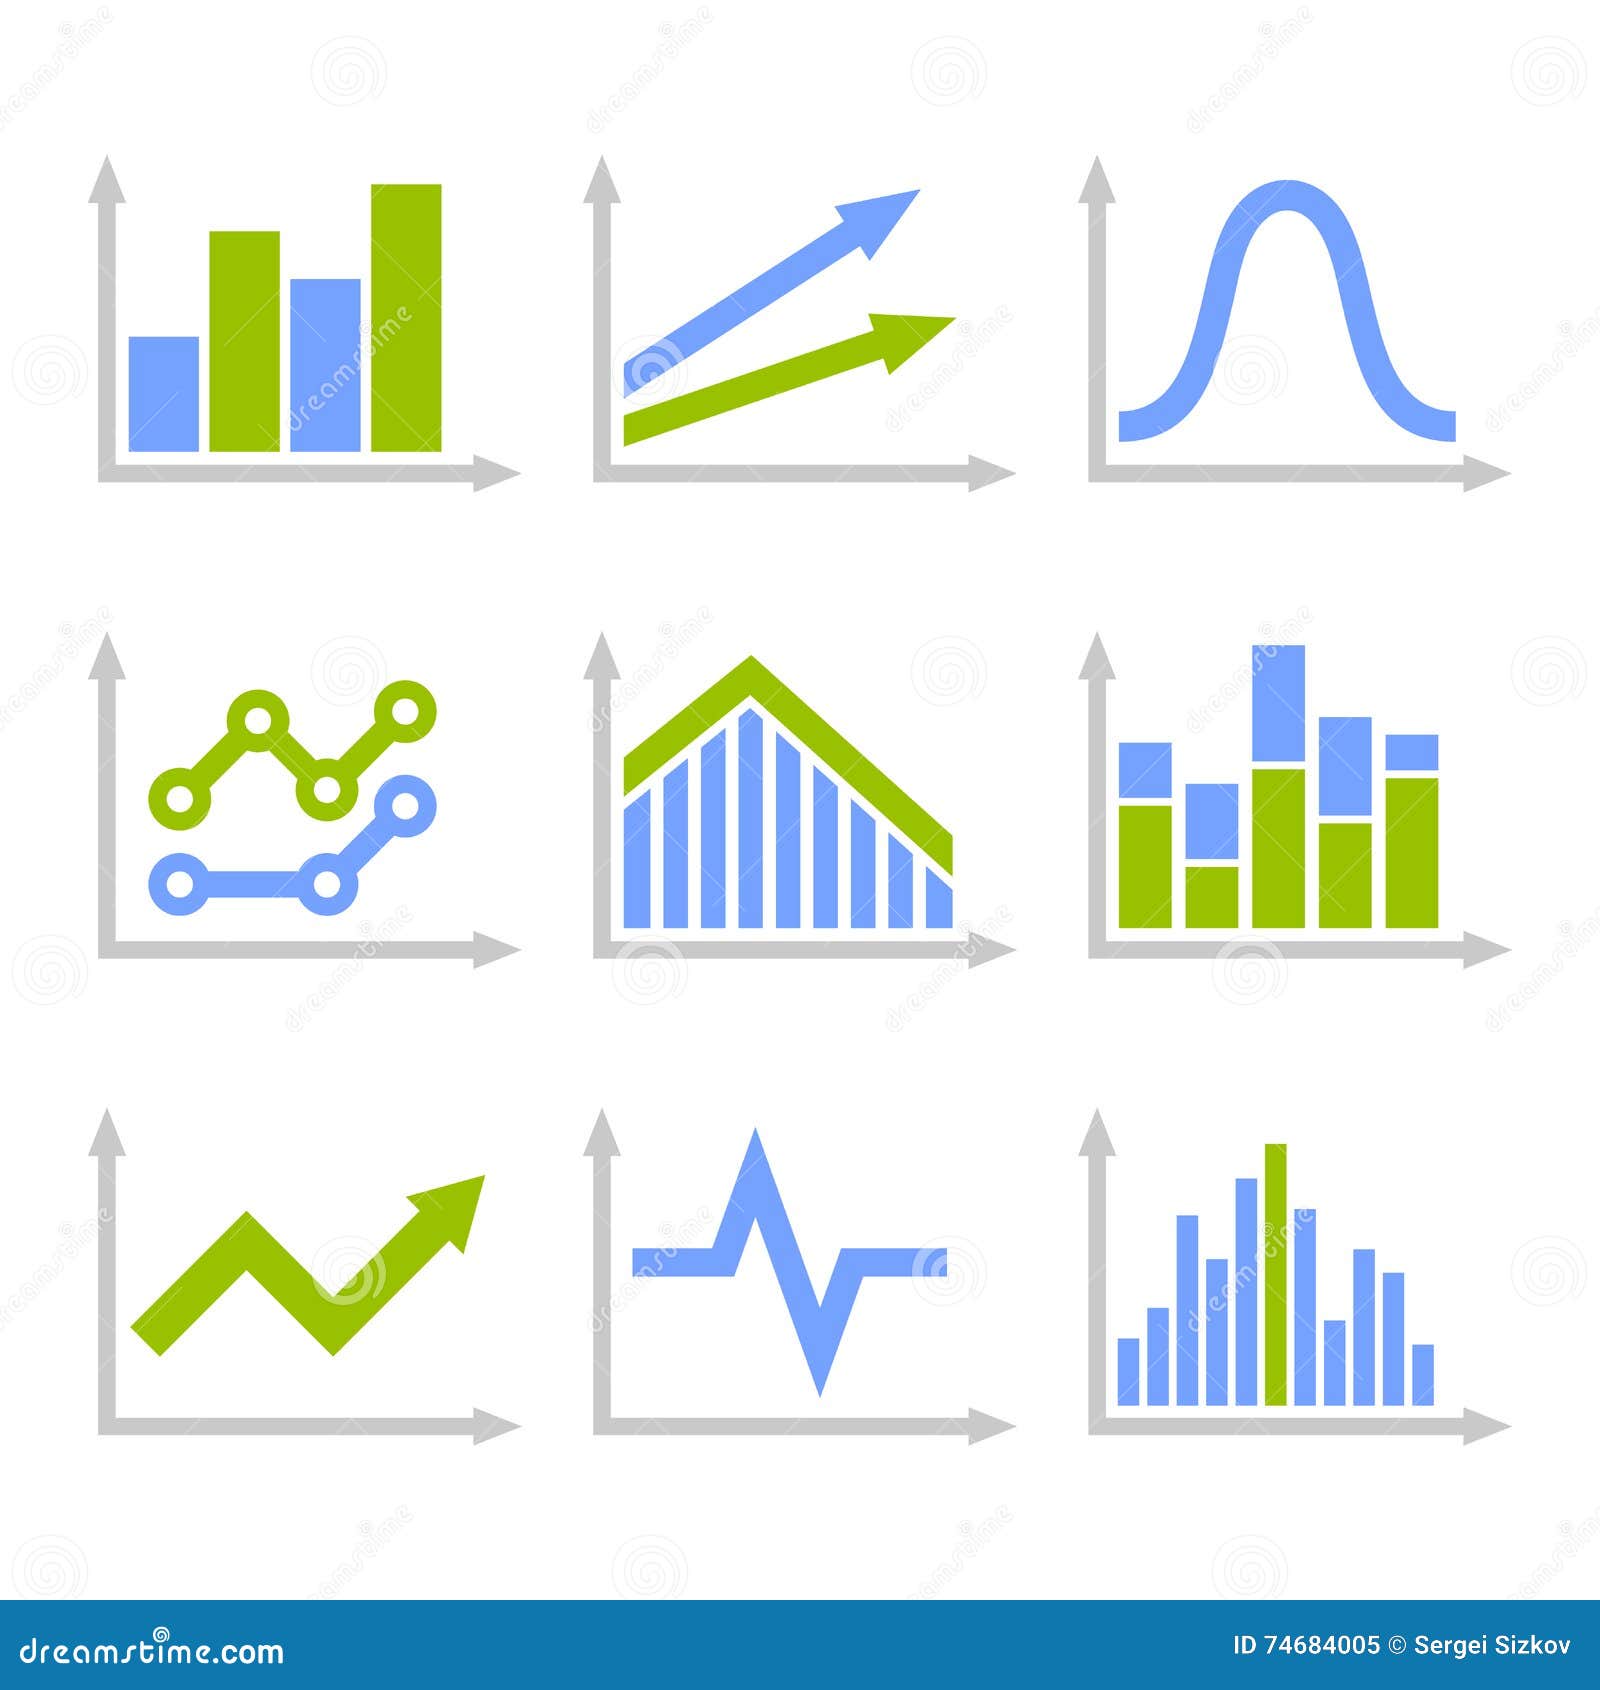 Swoosh Bar Chart Icons stock vector. Illustration of symbol - 30344051